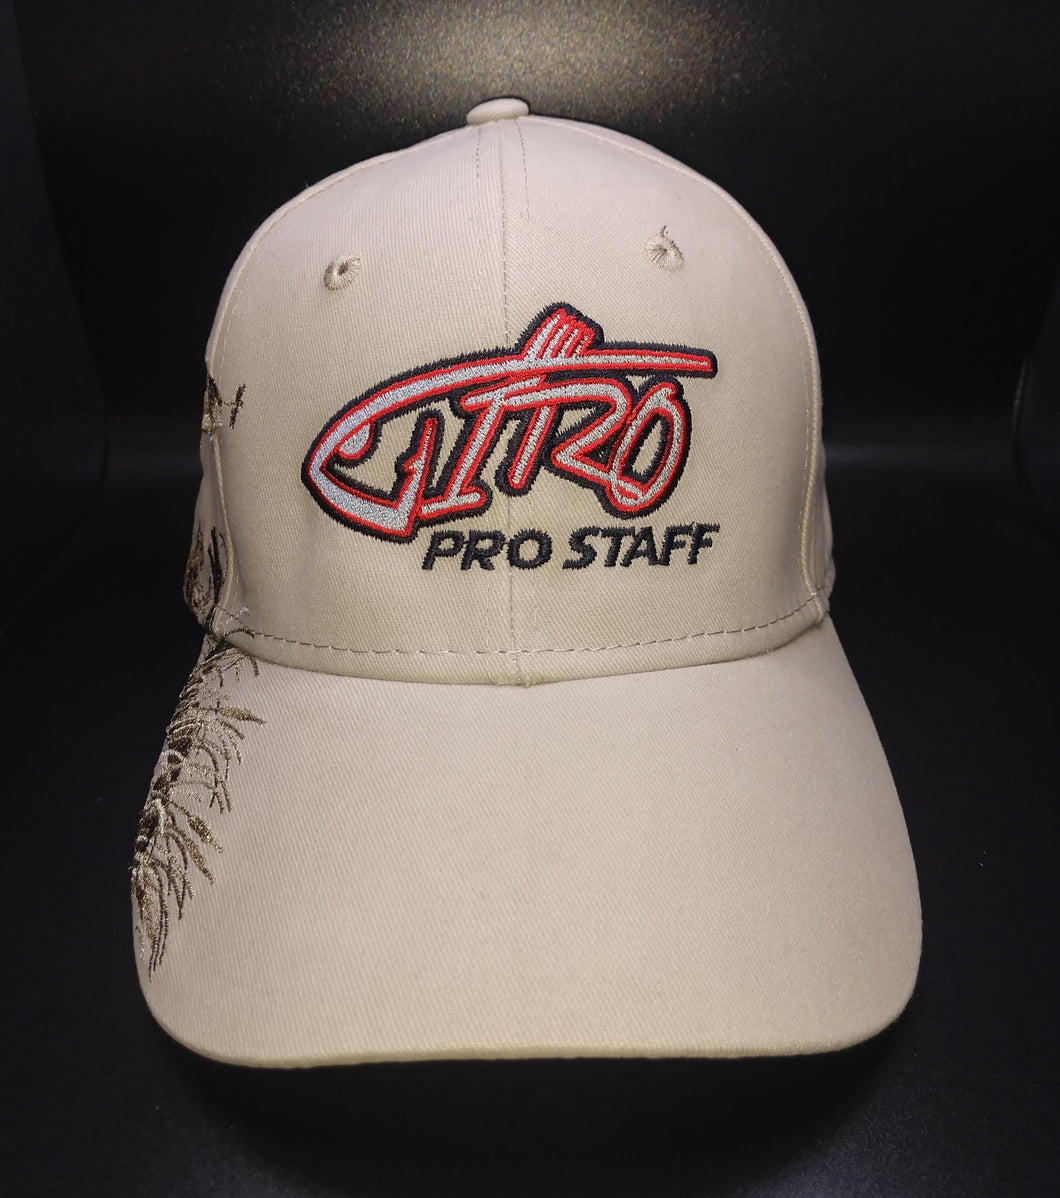 Giro Lures Dri-Duck Pro Staff Hats